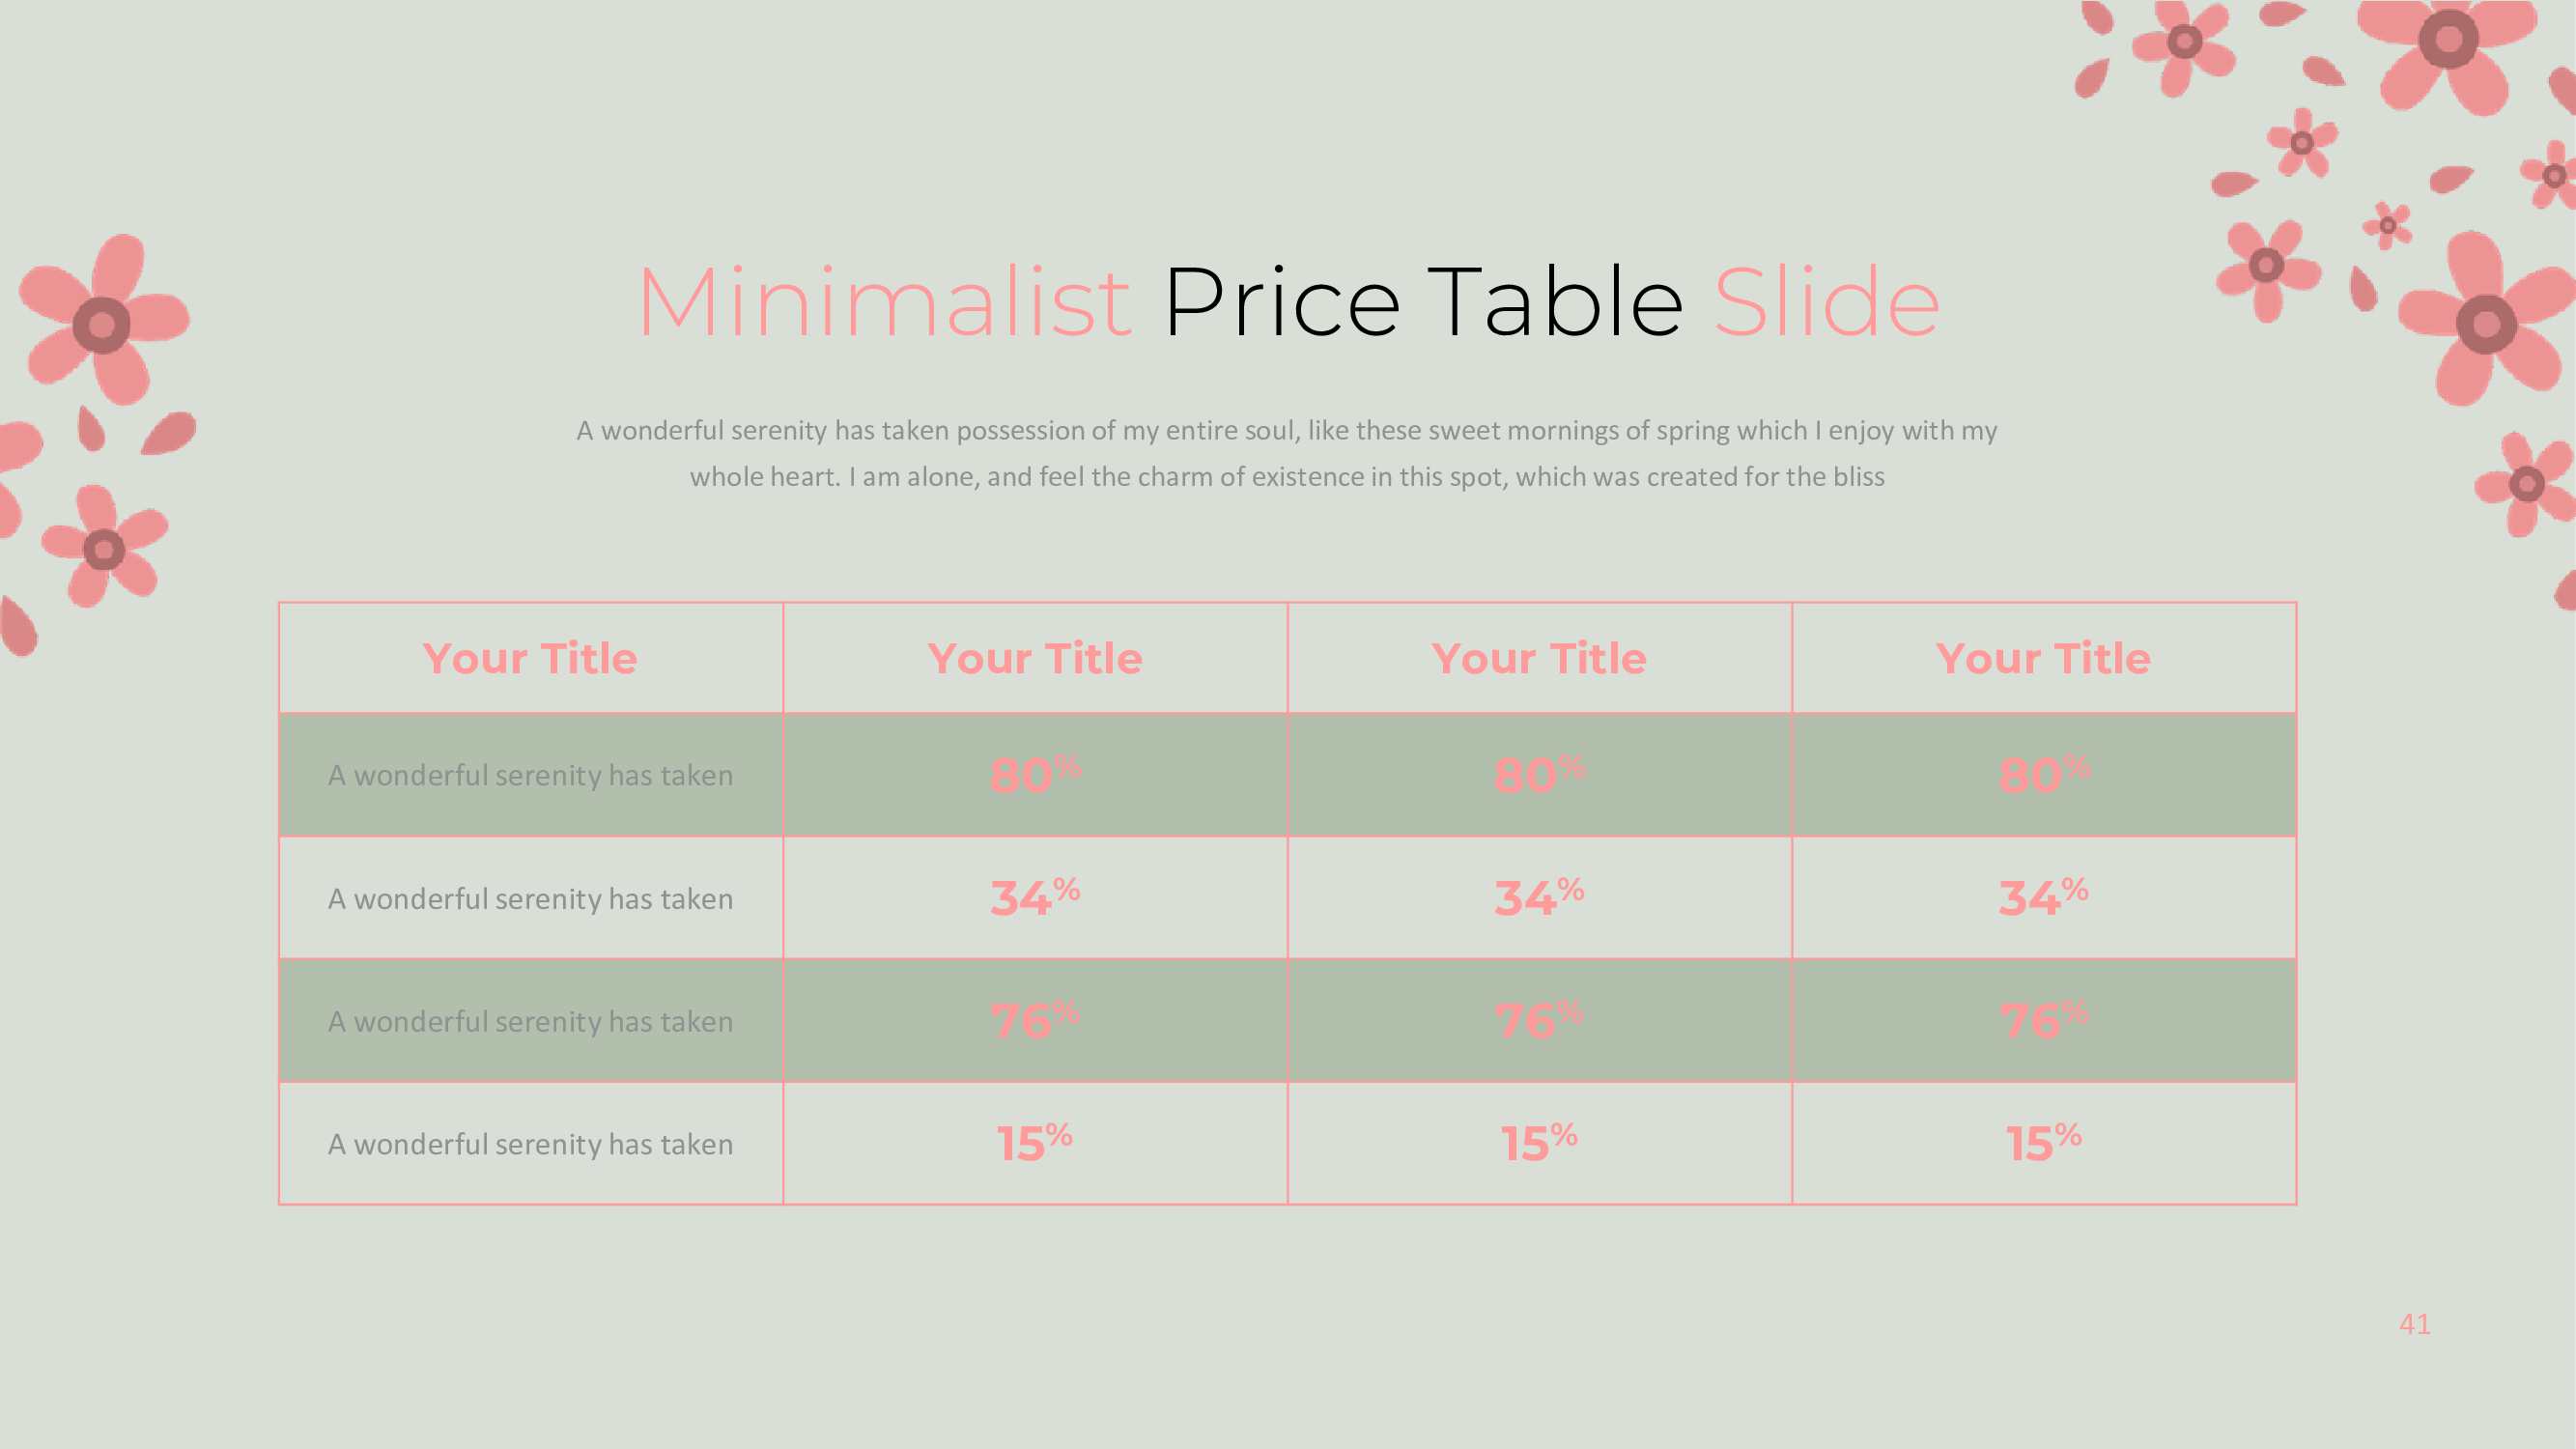 Slide with minimalist price table.